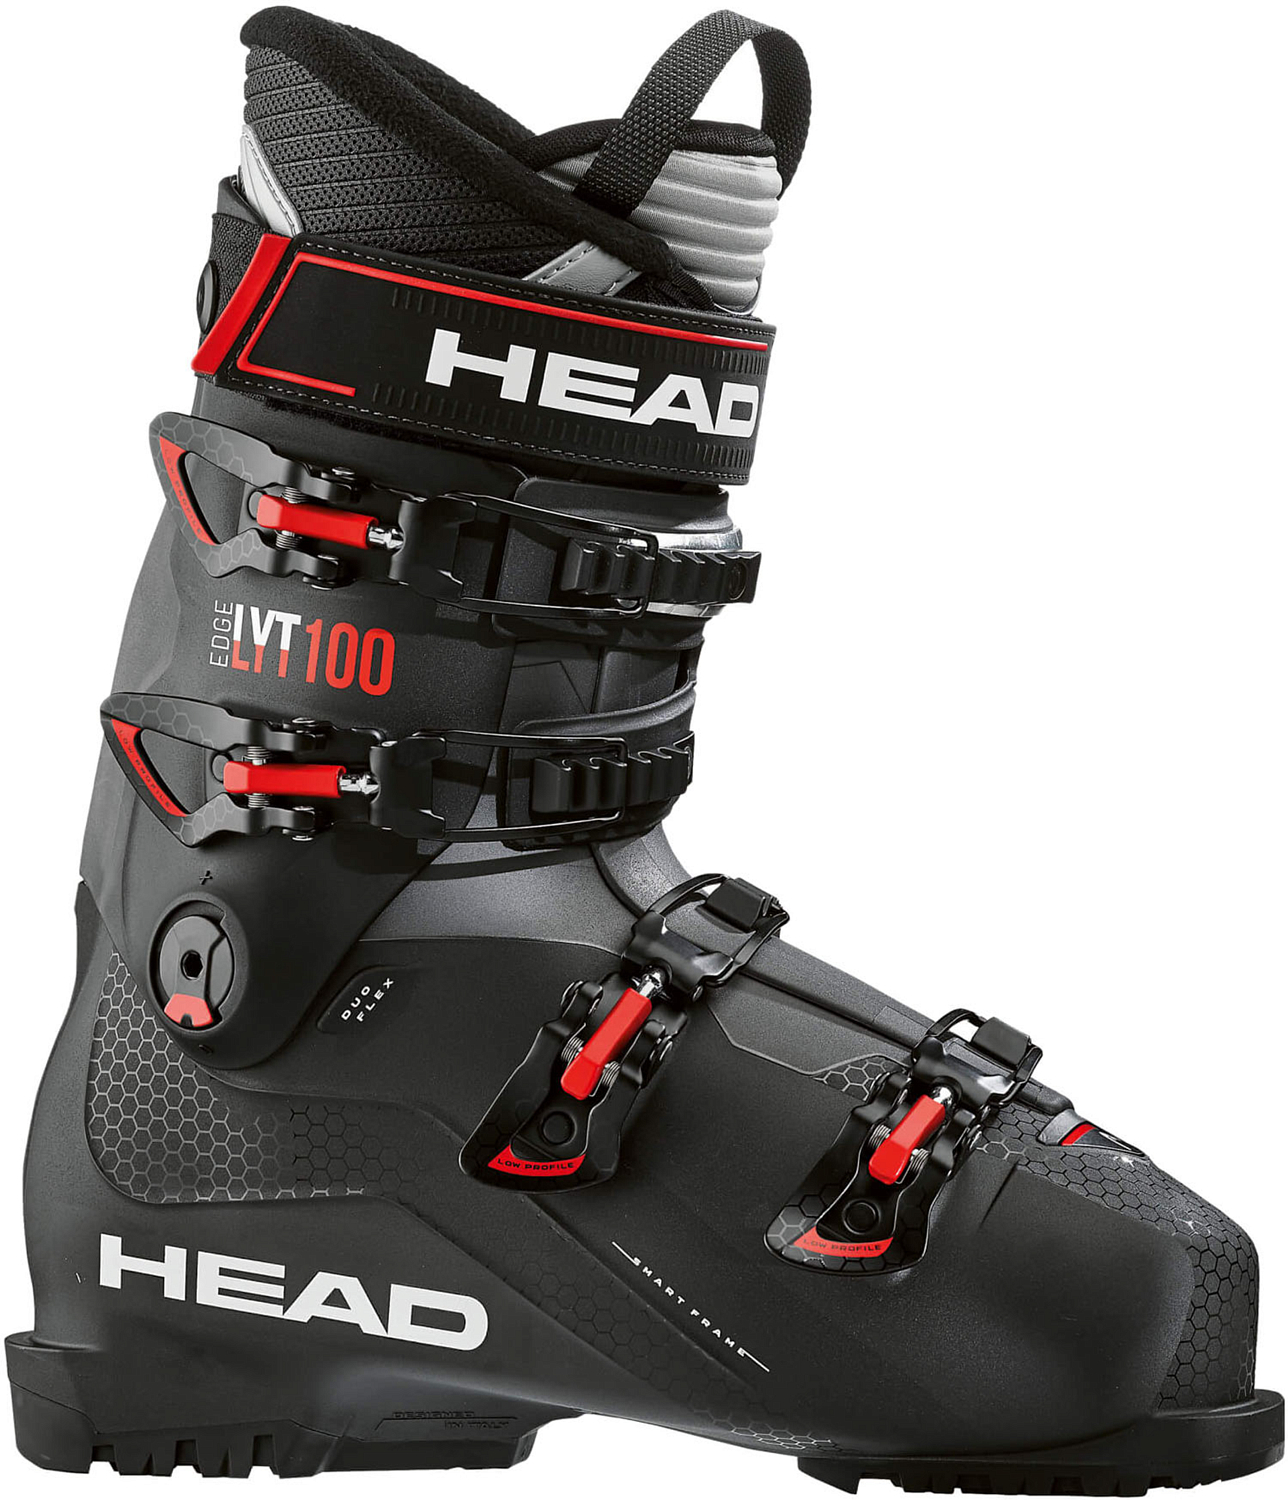 Горнолыжные ботинки Head Edge Lyt 100 2022 black/red, 27 см